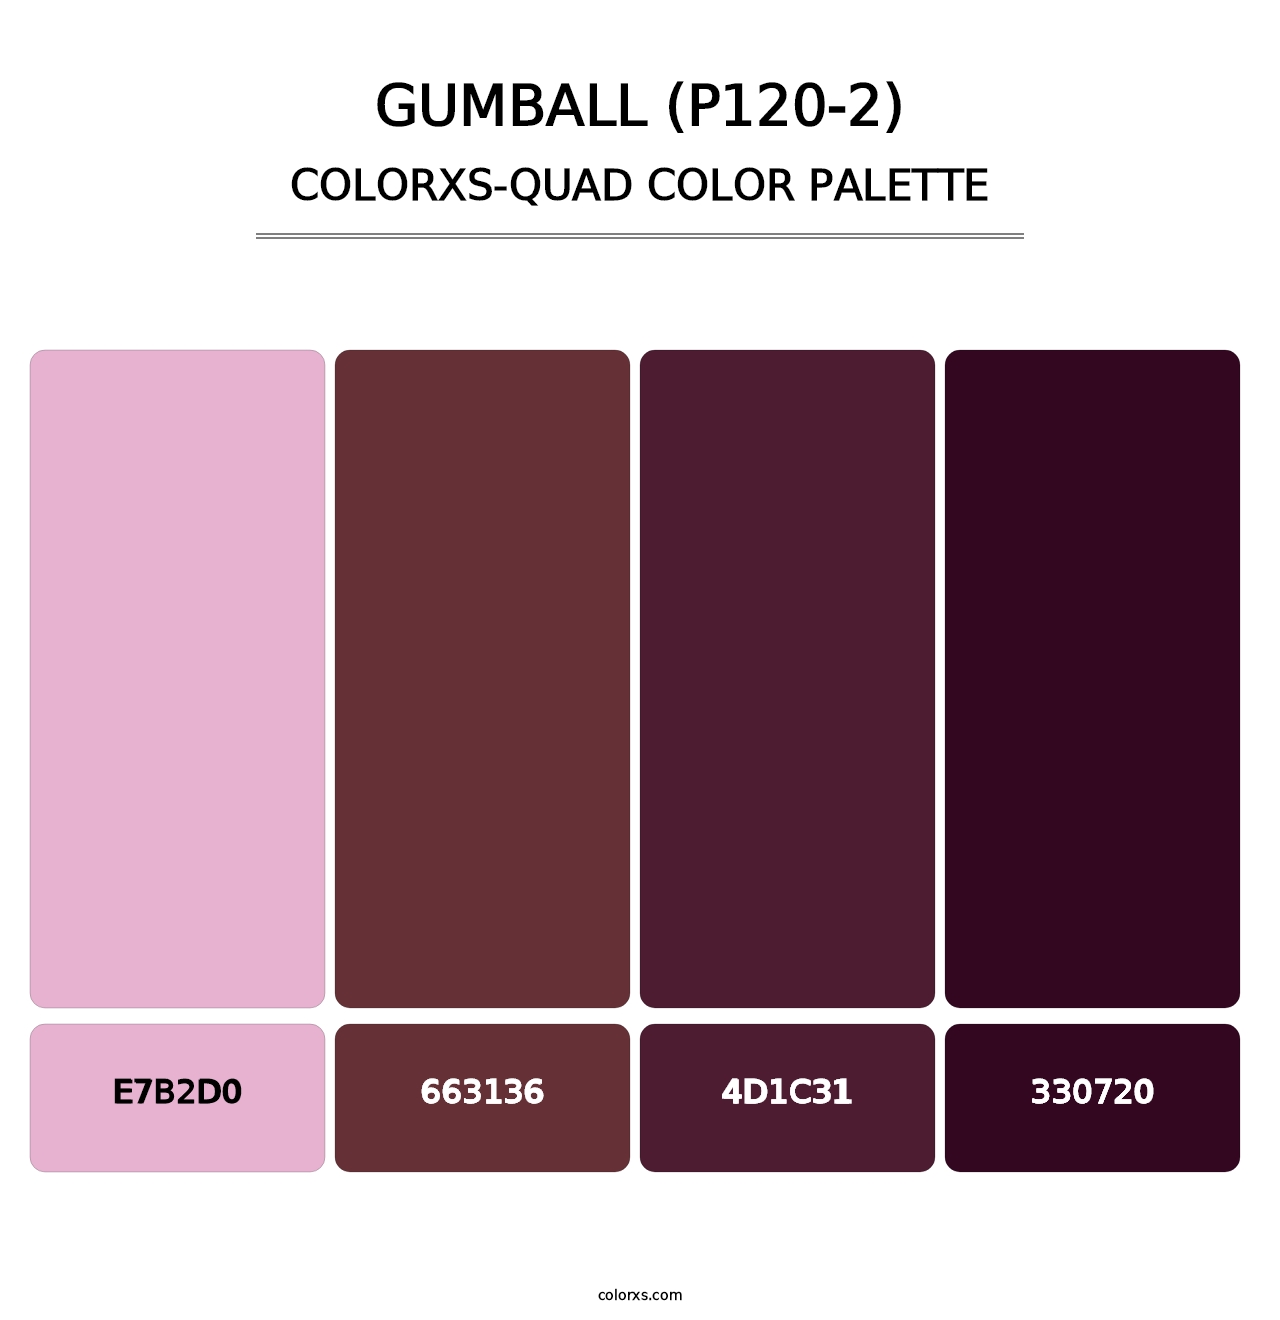 Gumball (P120-2) - Colorxs Quad Palette